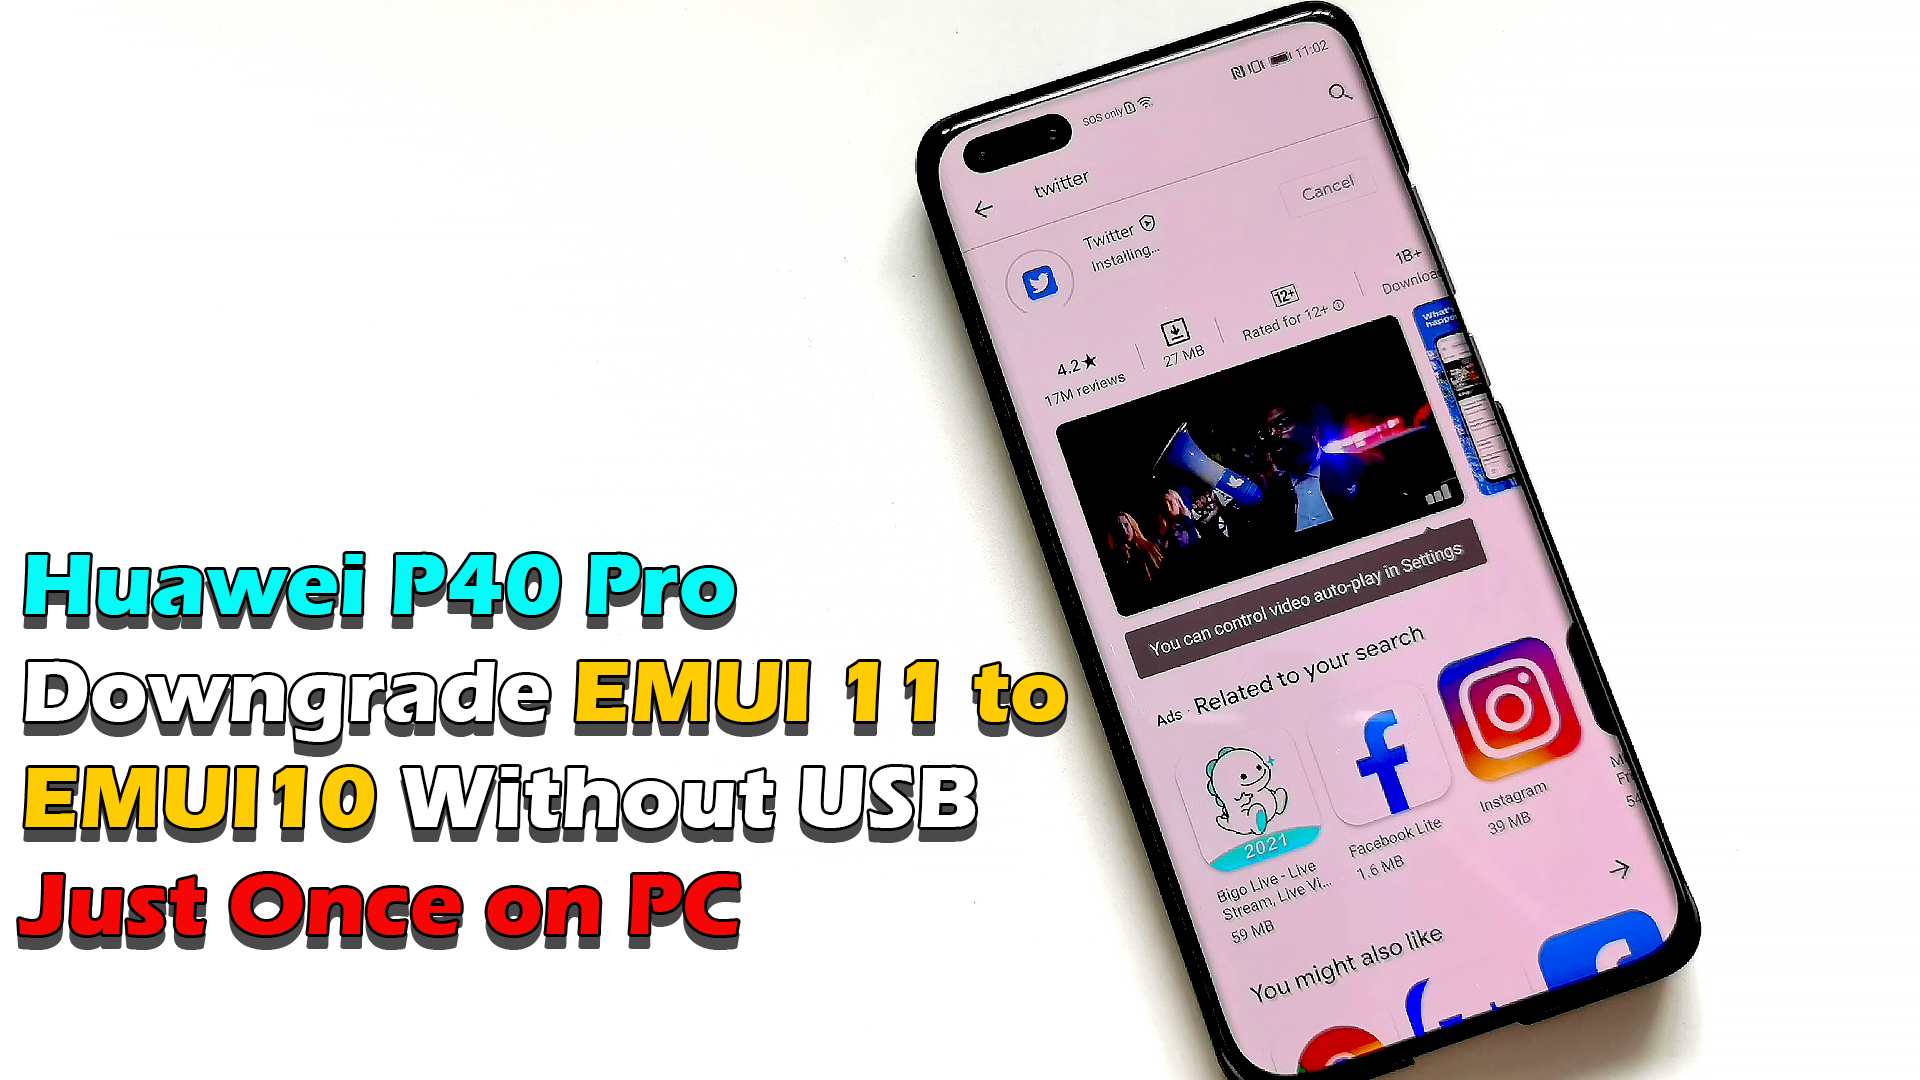 Huawei P40 Pro Downgrade EMUI 11 to EMUI 10 without USB